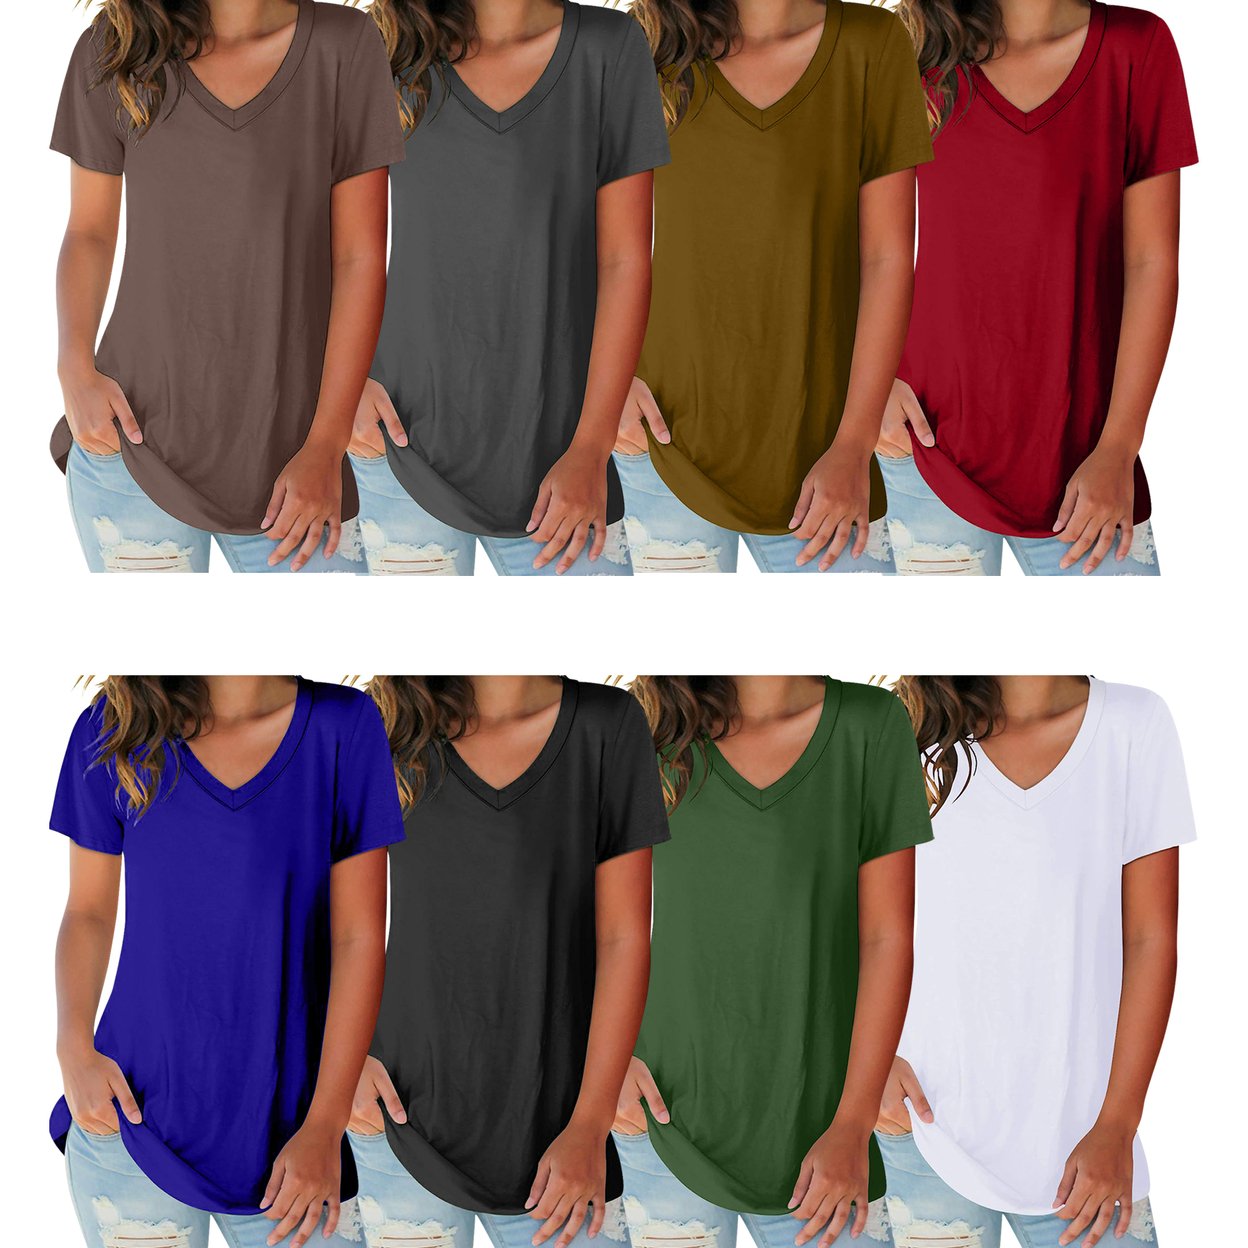 3-Pack: Women's Ultra Soft Smooth Cotton Blend Basic V-Neck Short Sleeve Shirts - Black White, Red, Medium